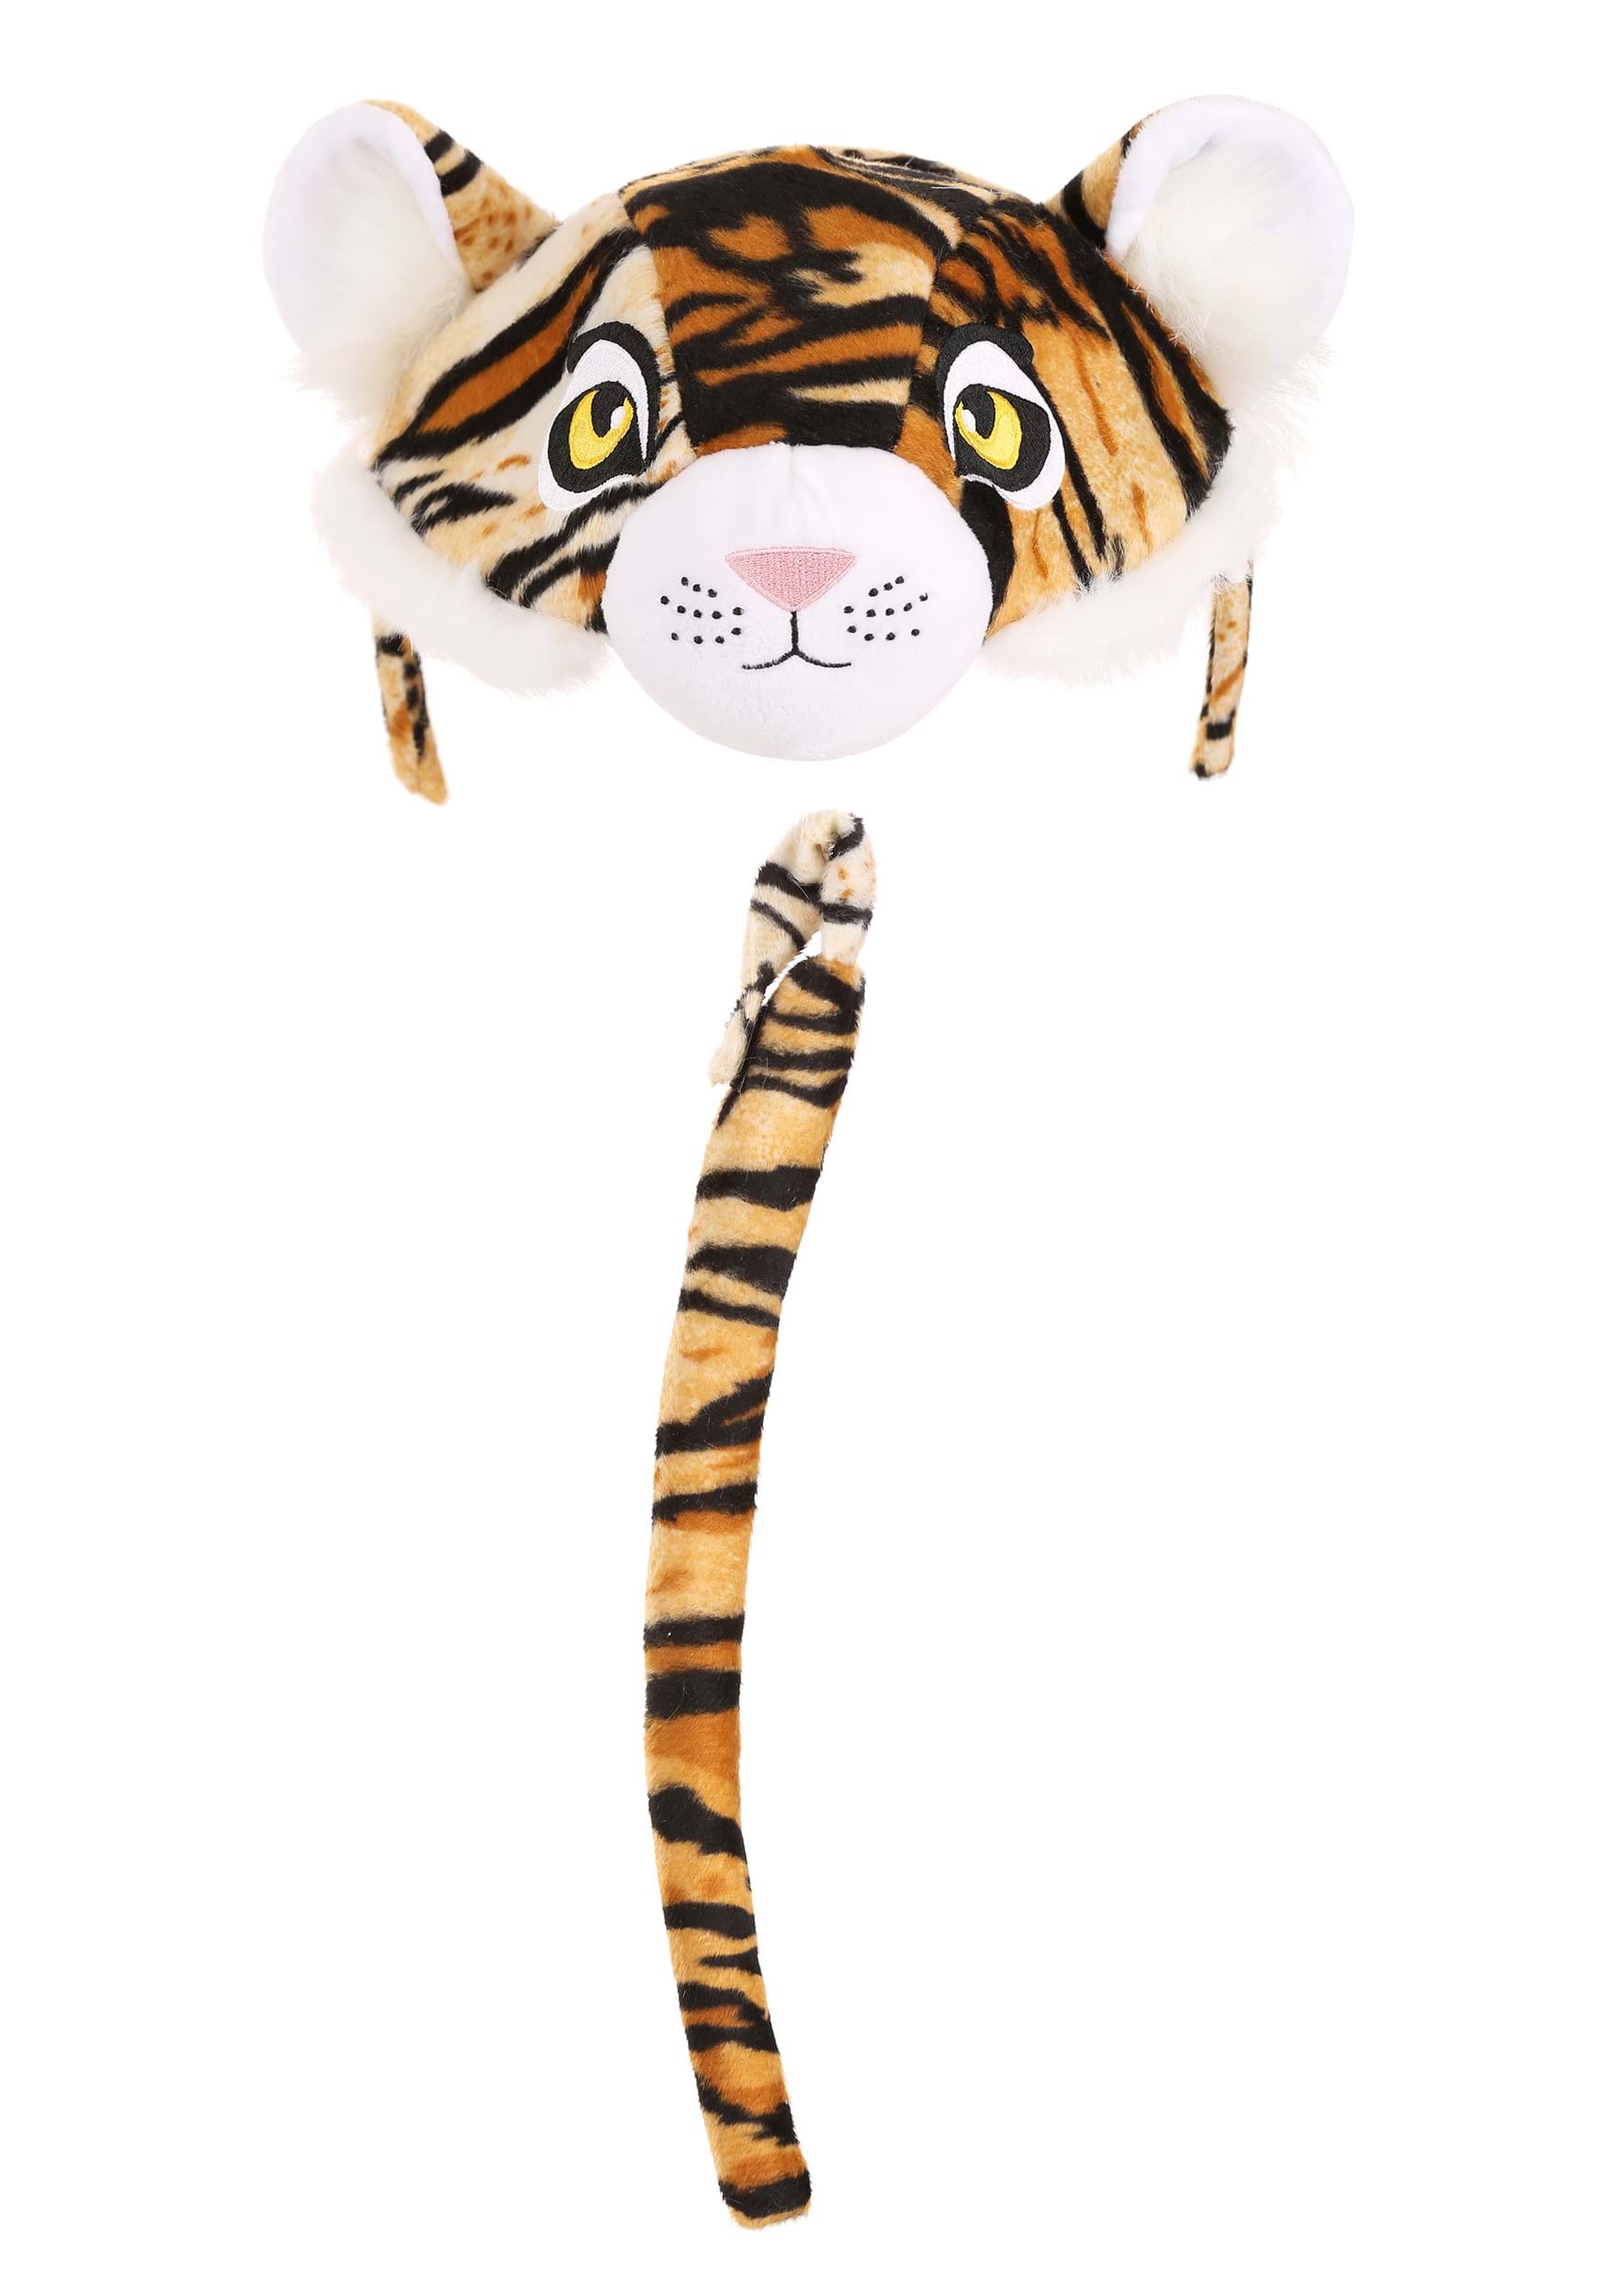 TIGER STRIPES KIT Plush Cloth Tail Ears Headband Hat Mask Set Adult Kid Animal 